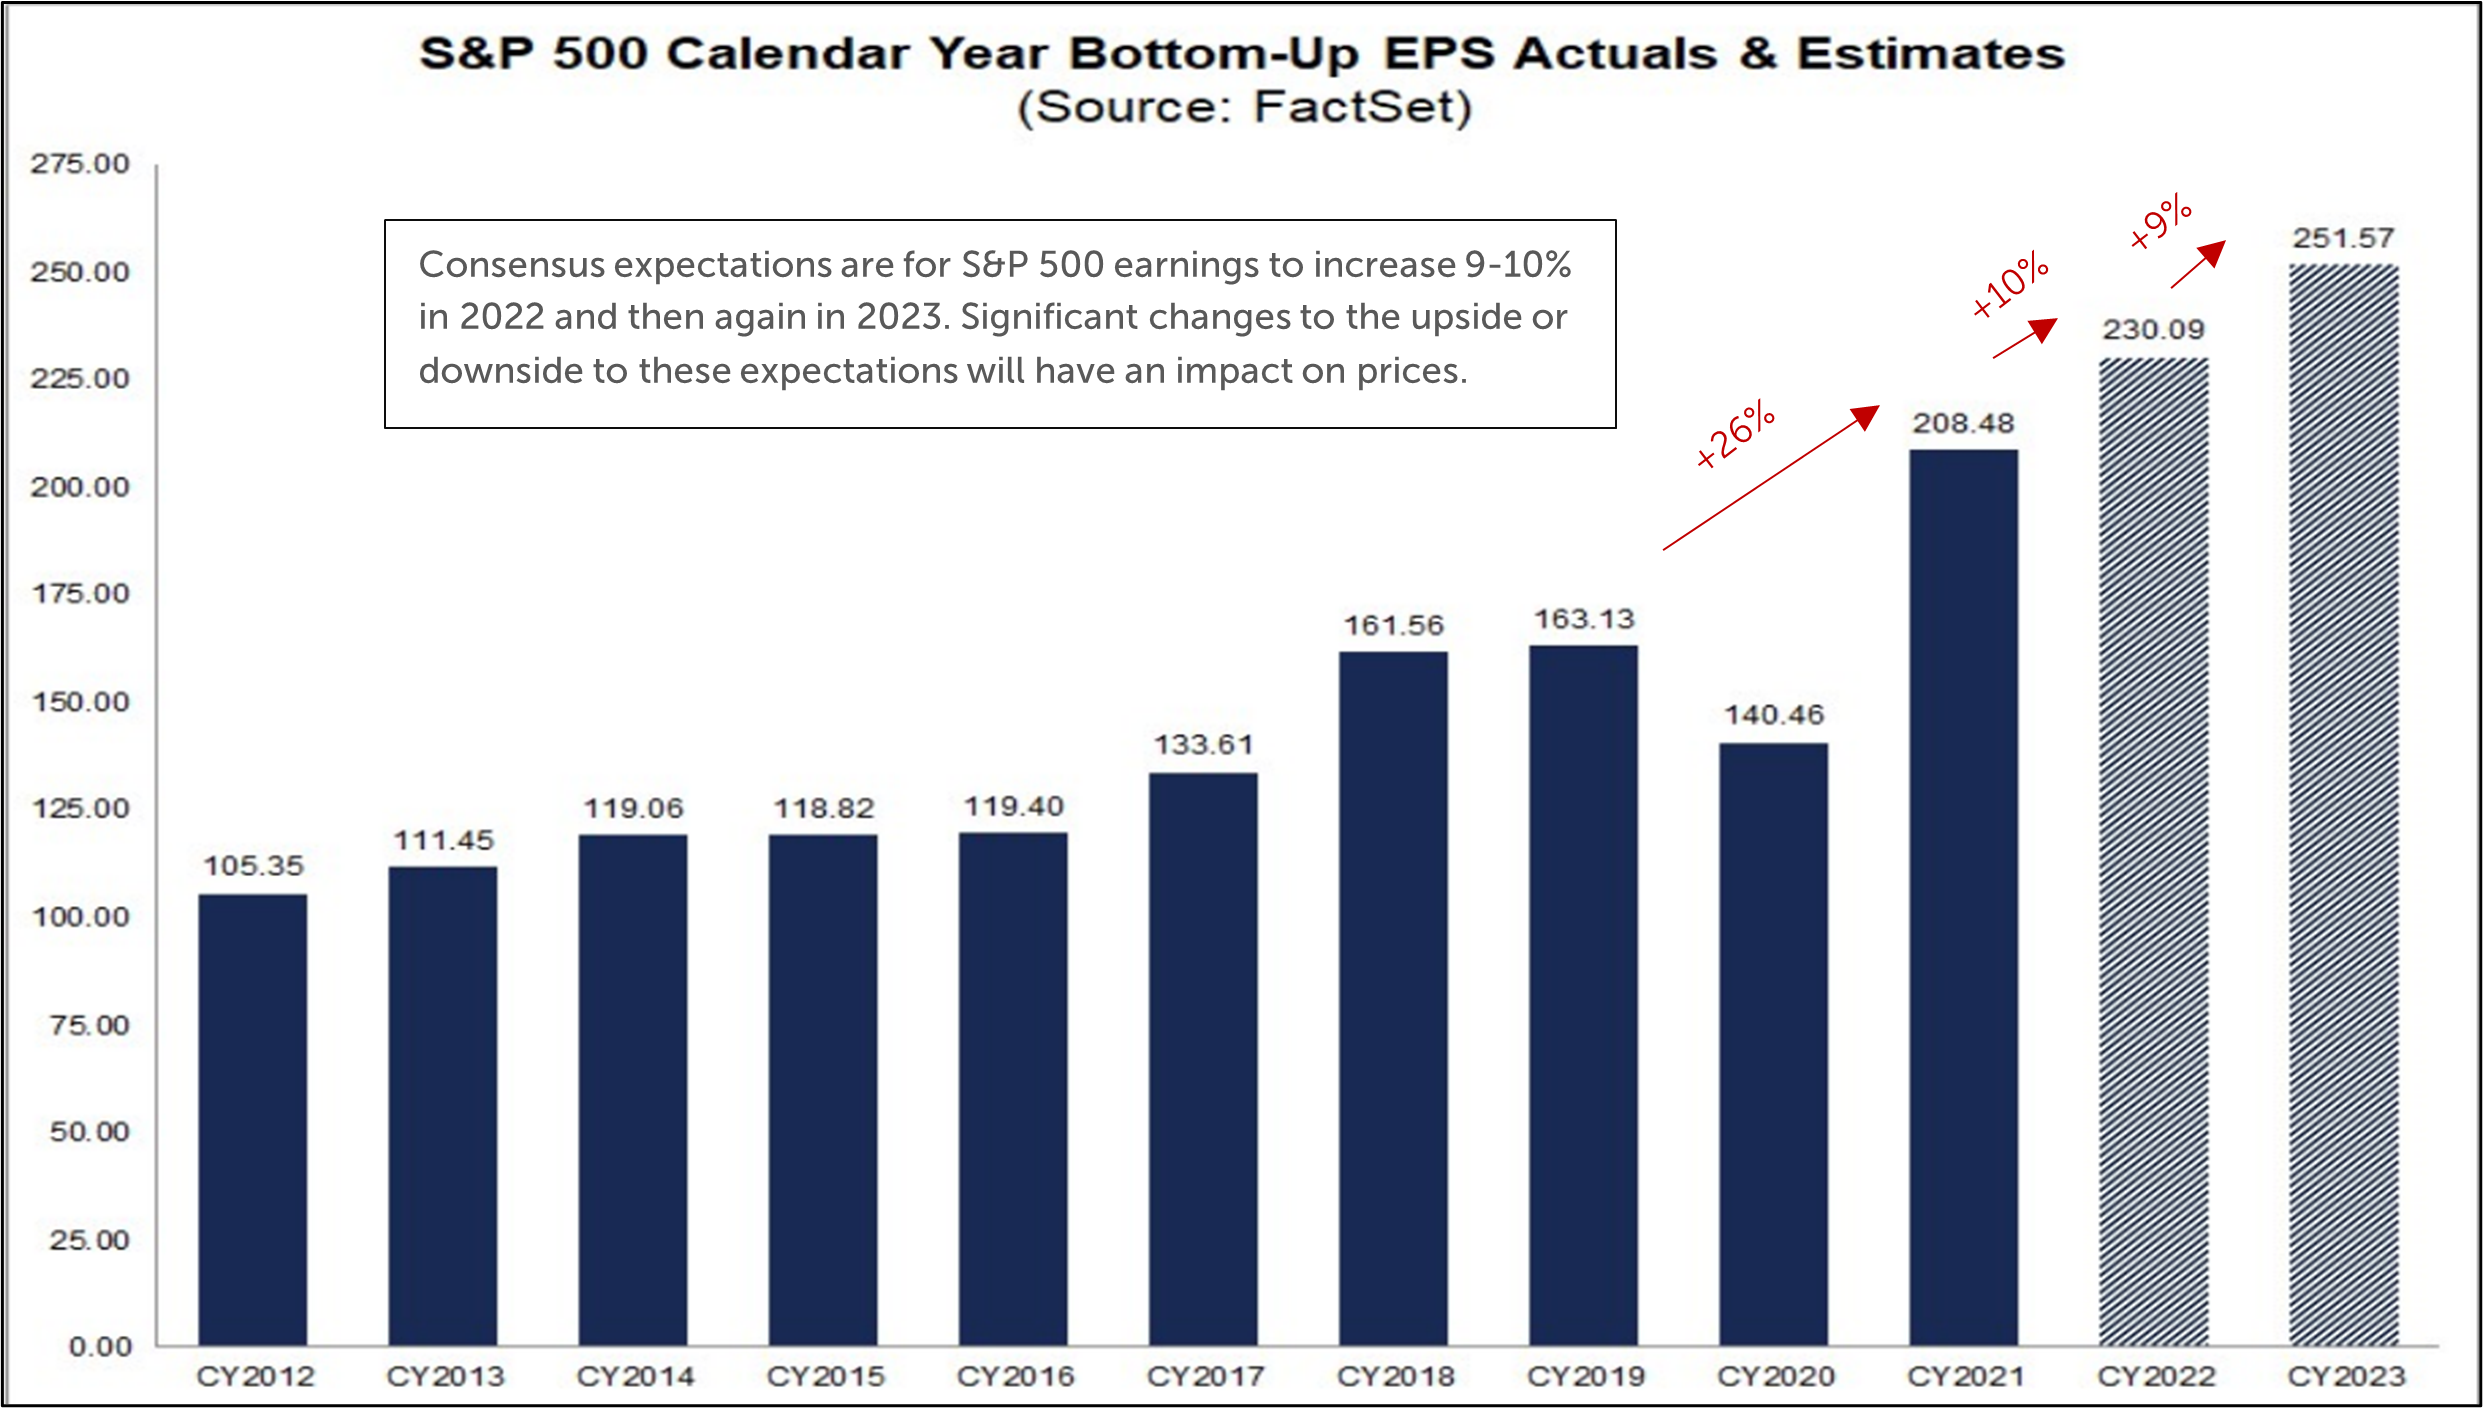 Bar graph depicting S&P 500 Calendar Year Bottom-Up EPS Actuals & Estimates